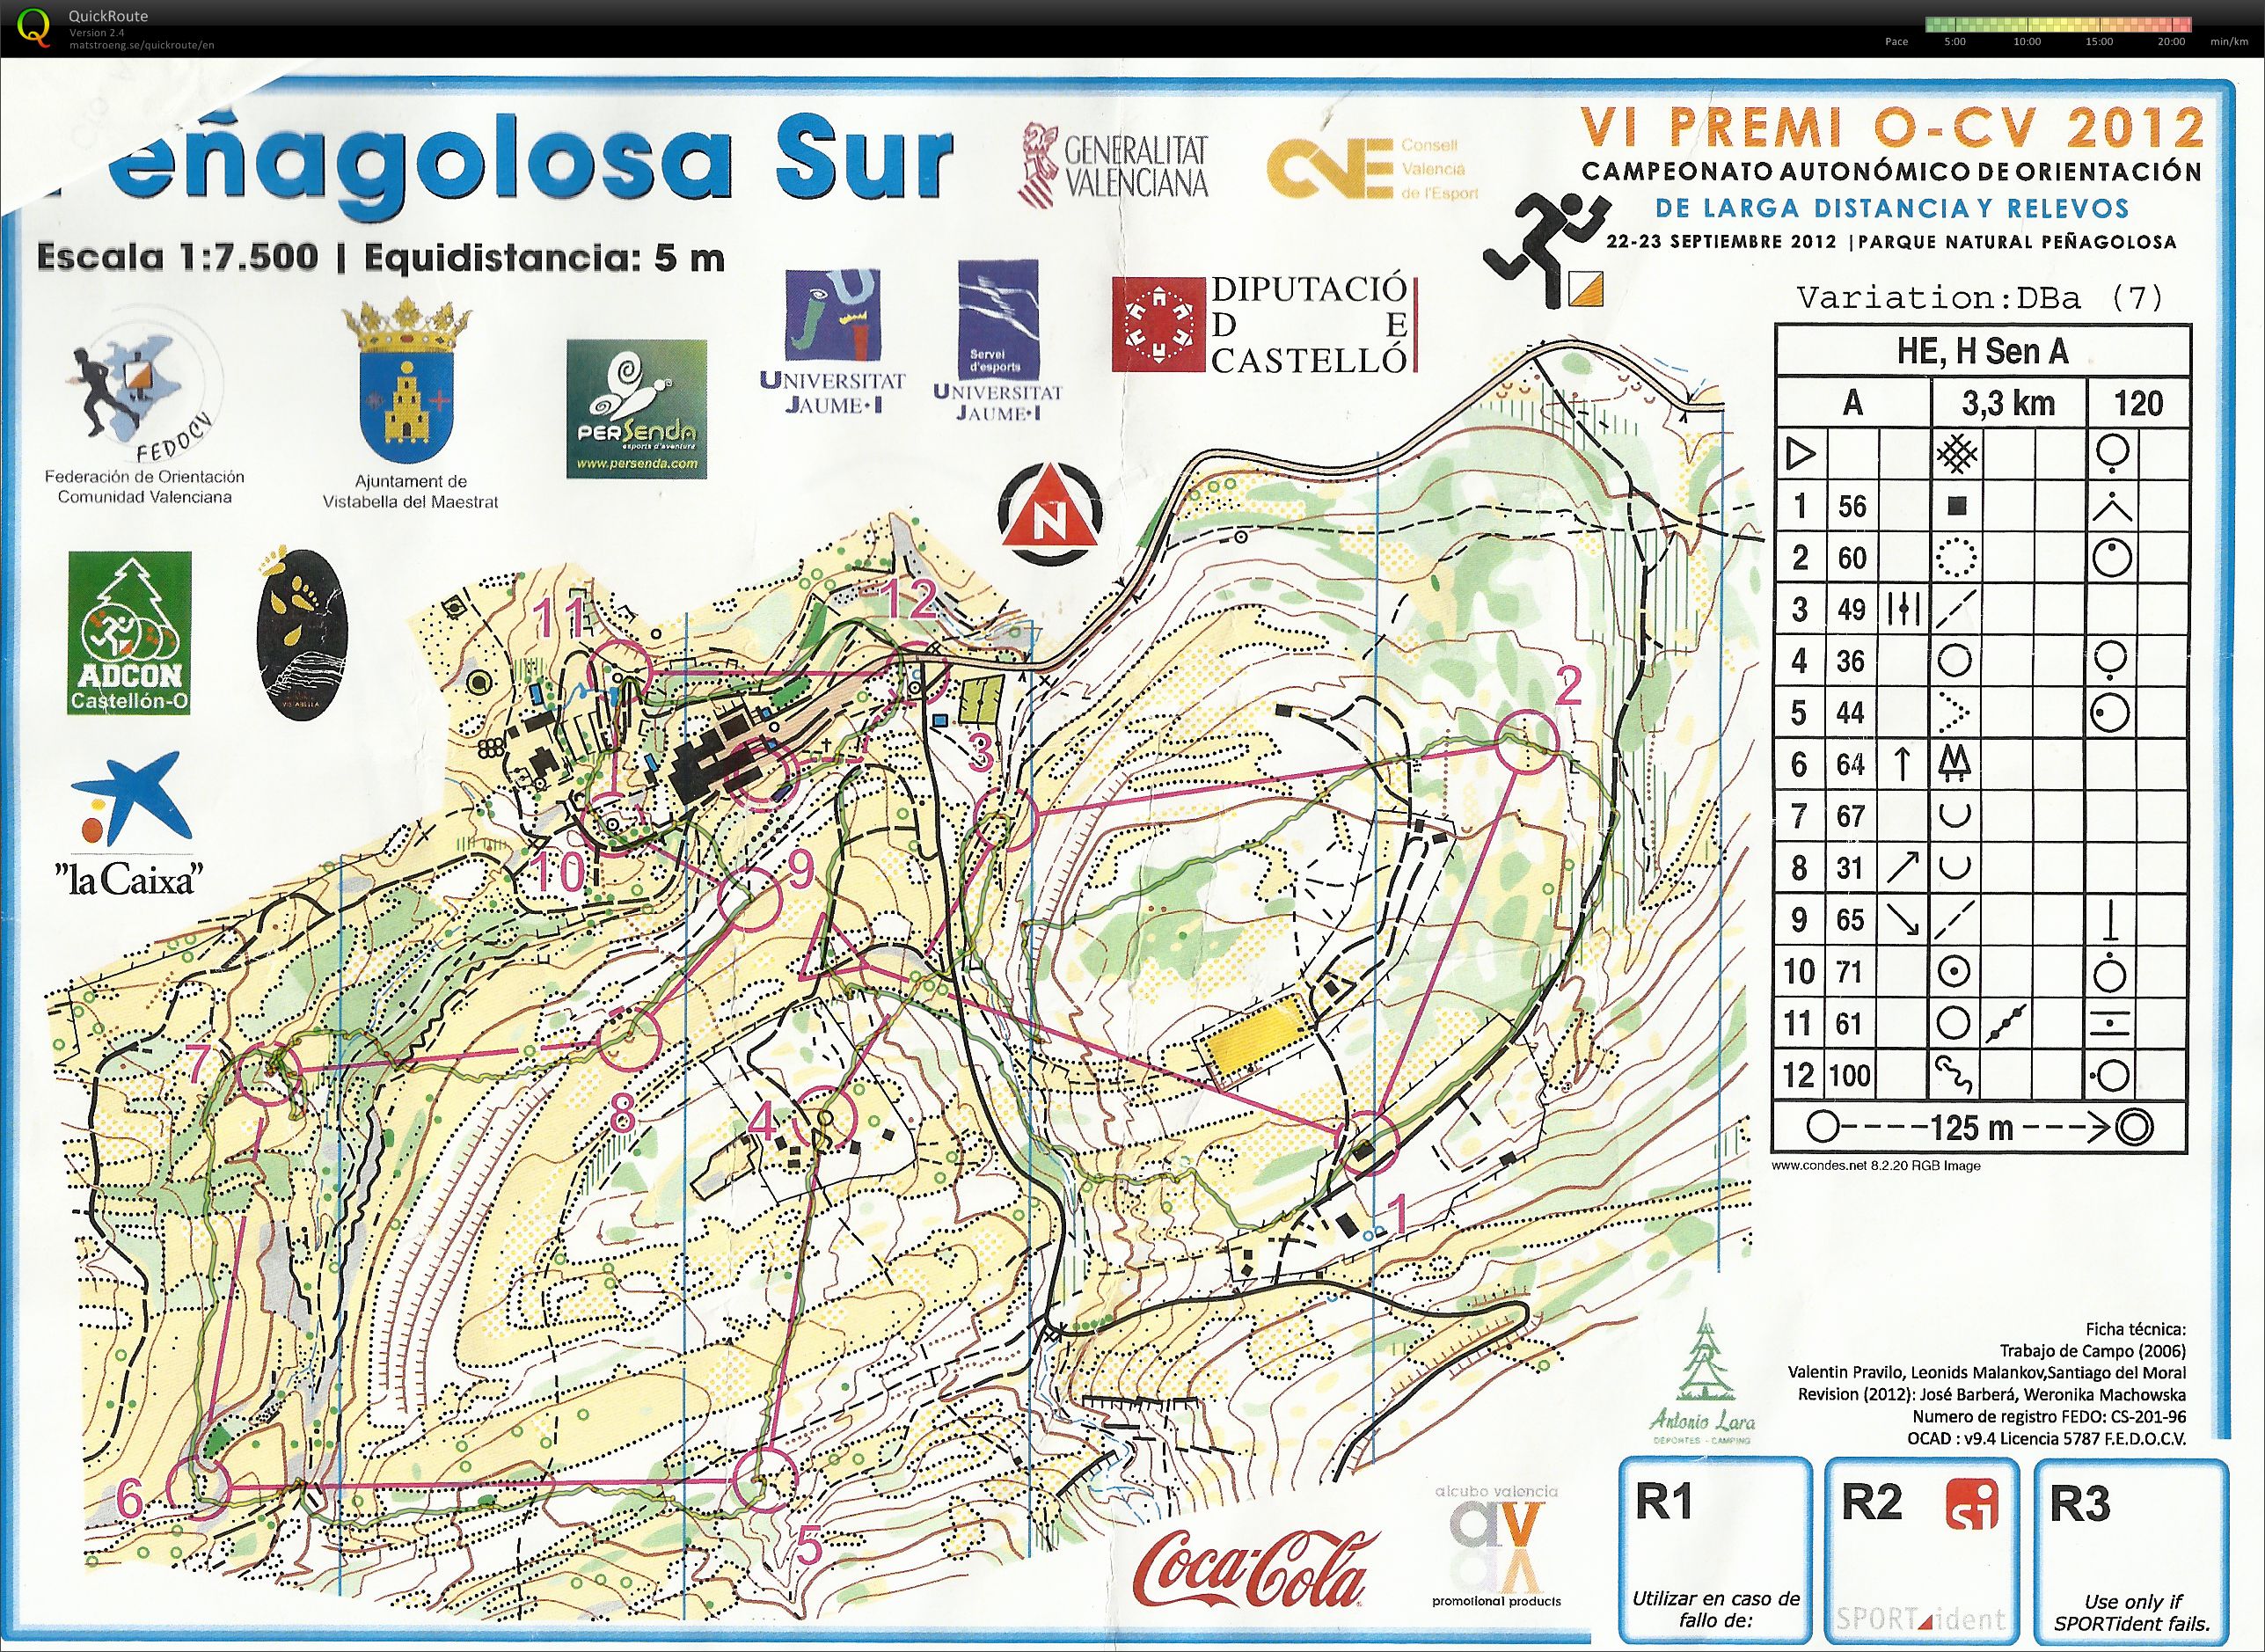 Campeonato Autonómico Penyagolosa Relevos01 (2012-09-23)